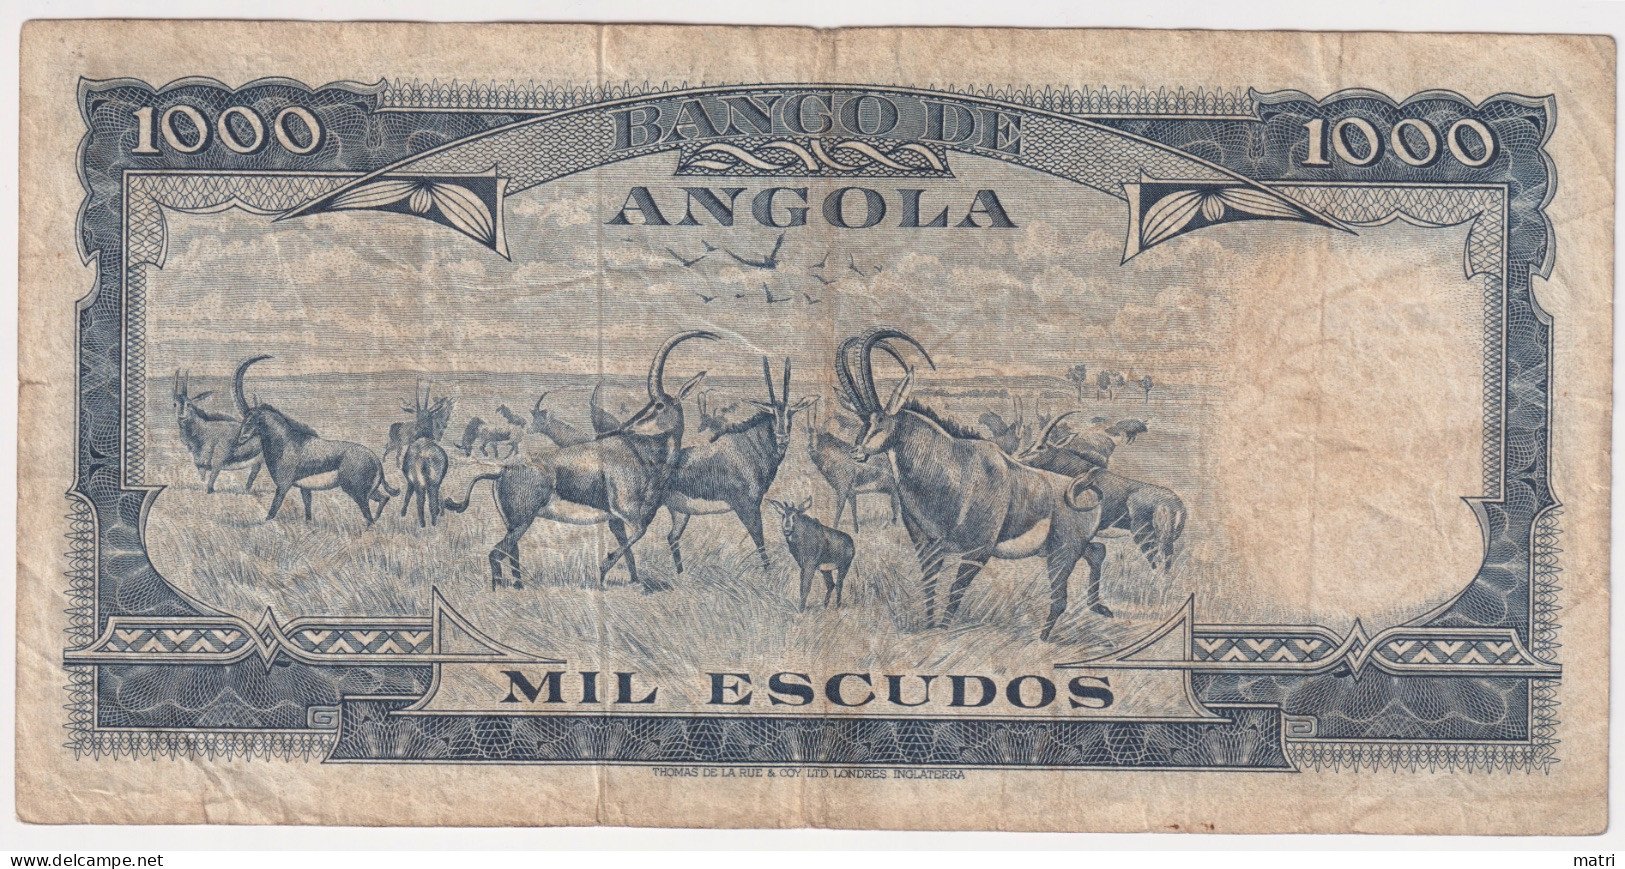 Angola 1000 Escudos 1970 P-98 - Angola